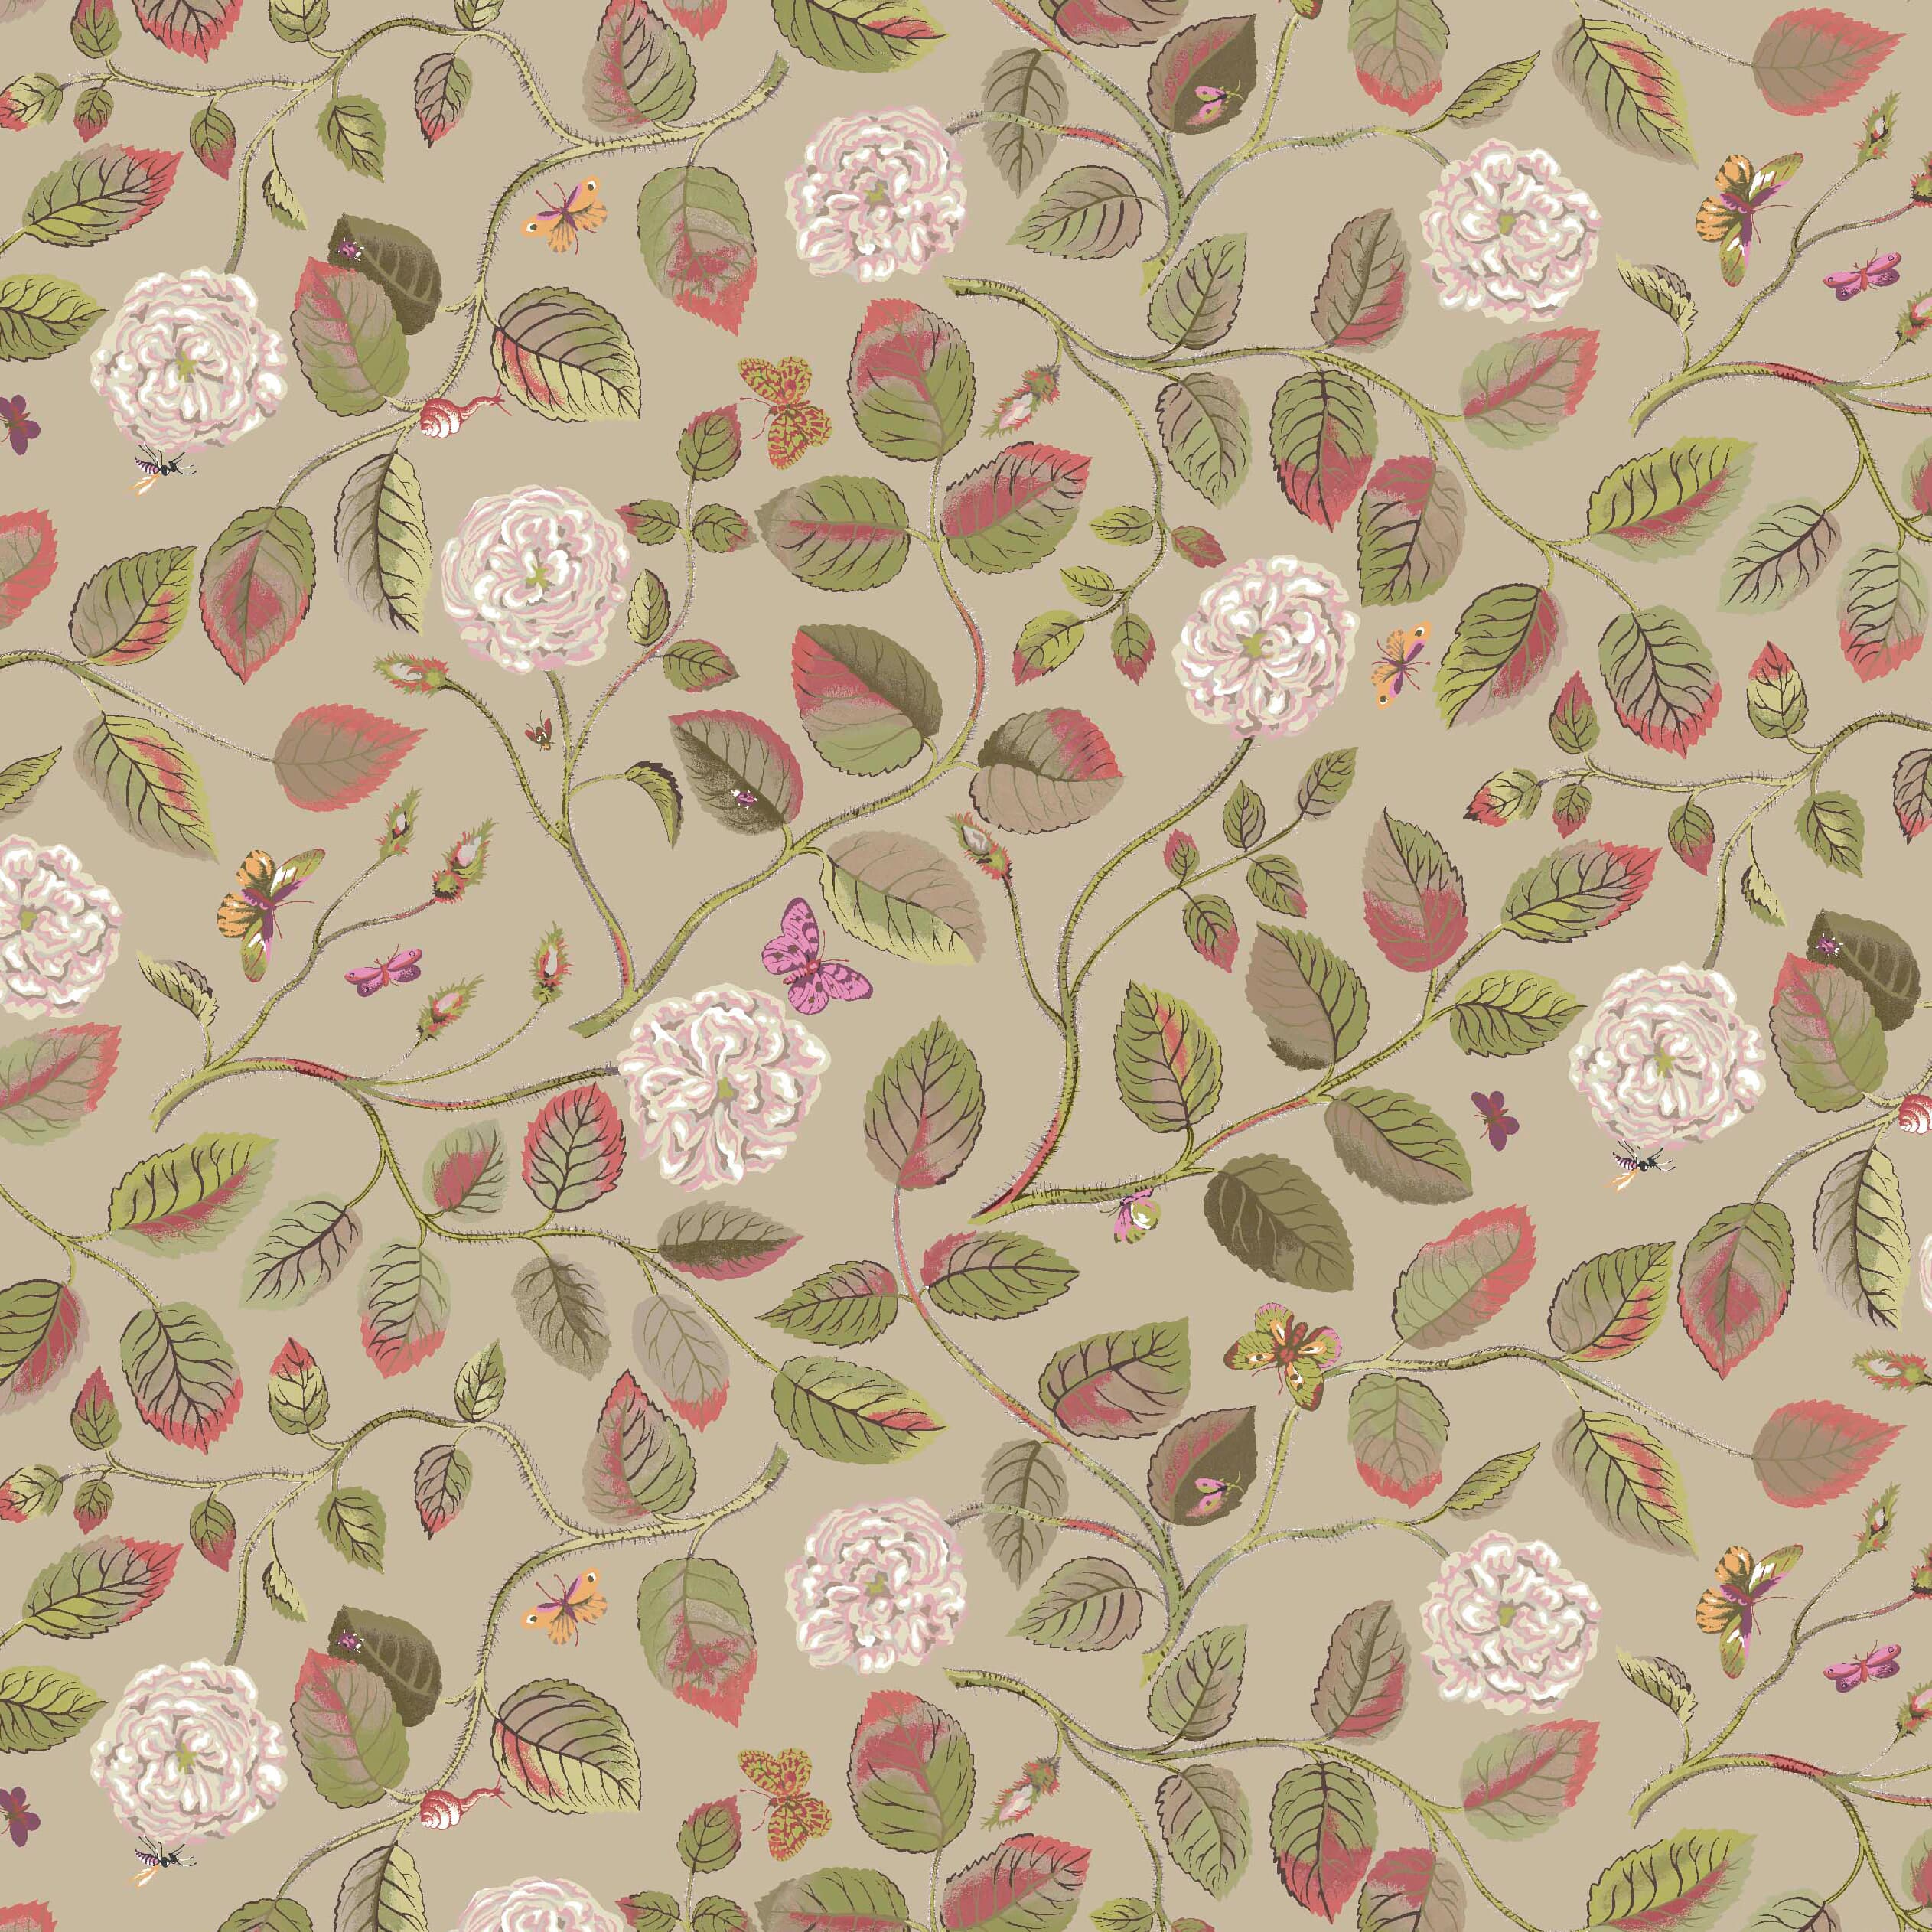 7830-1 Wandering Rose Petal by Stout Fabric